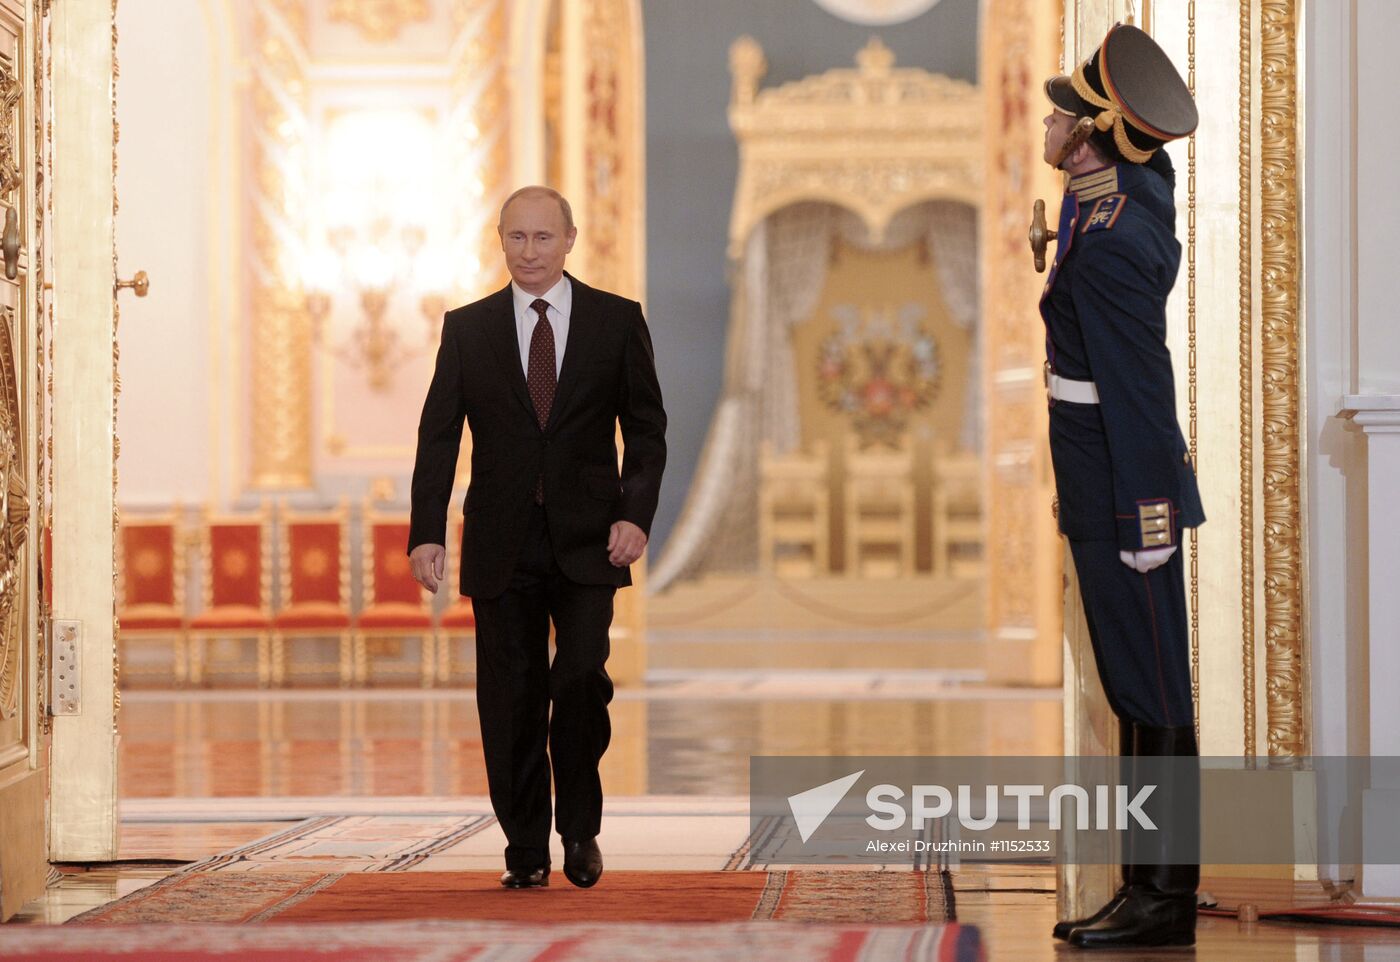 Putin awards State Prizes in the Kremlin